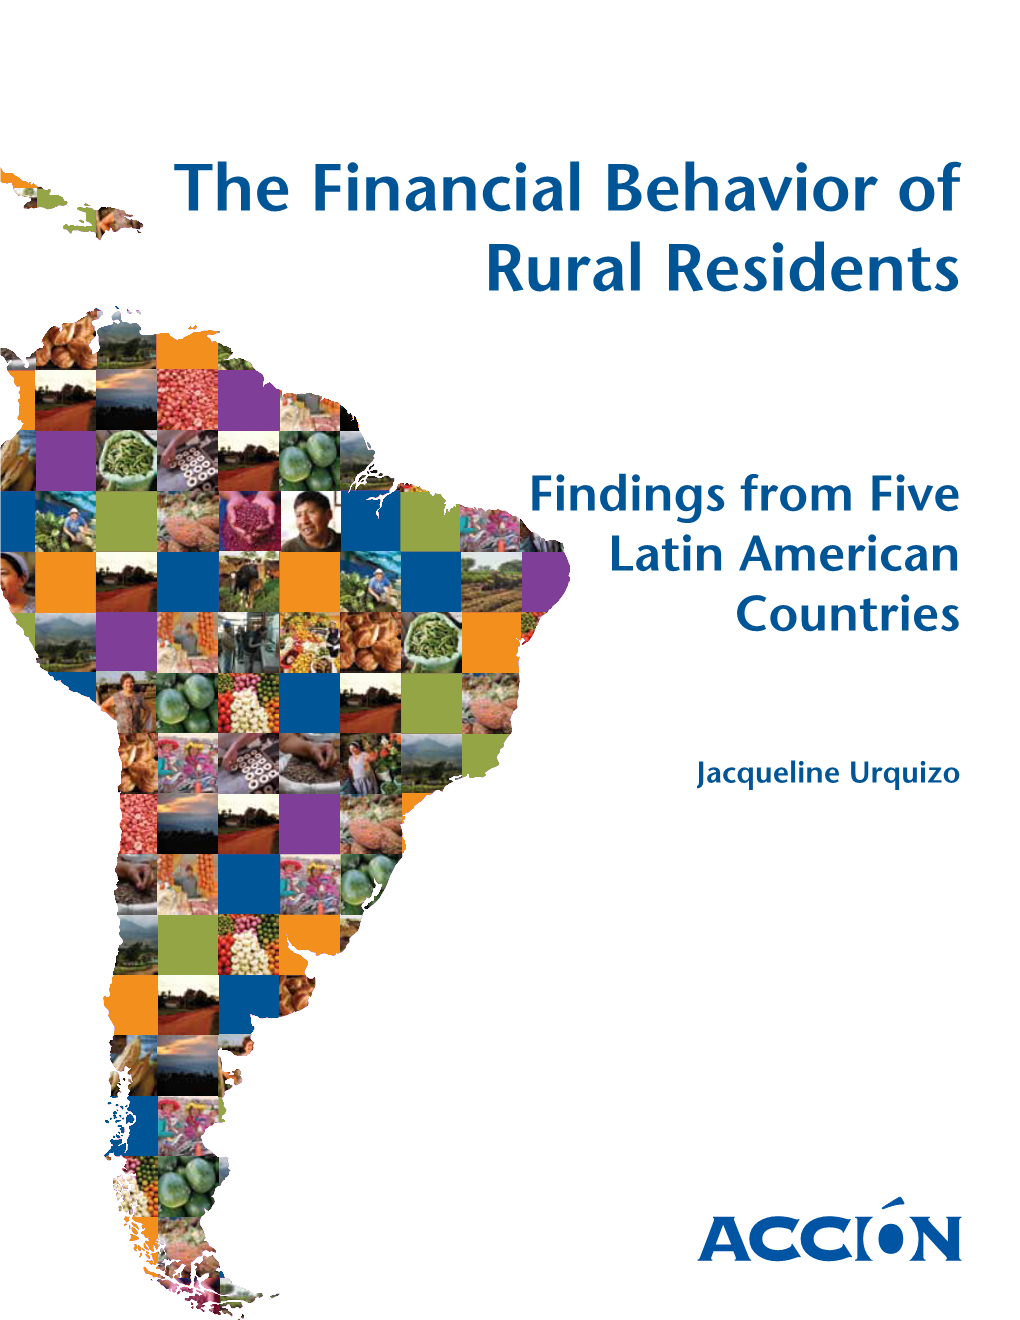 The Financial Behavior of Rural Residents